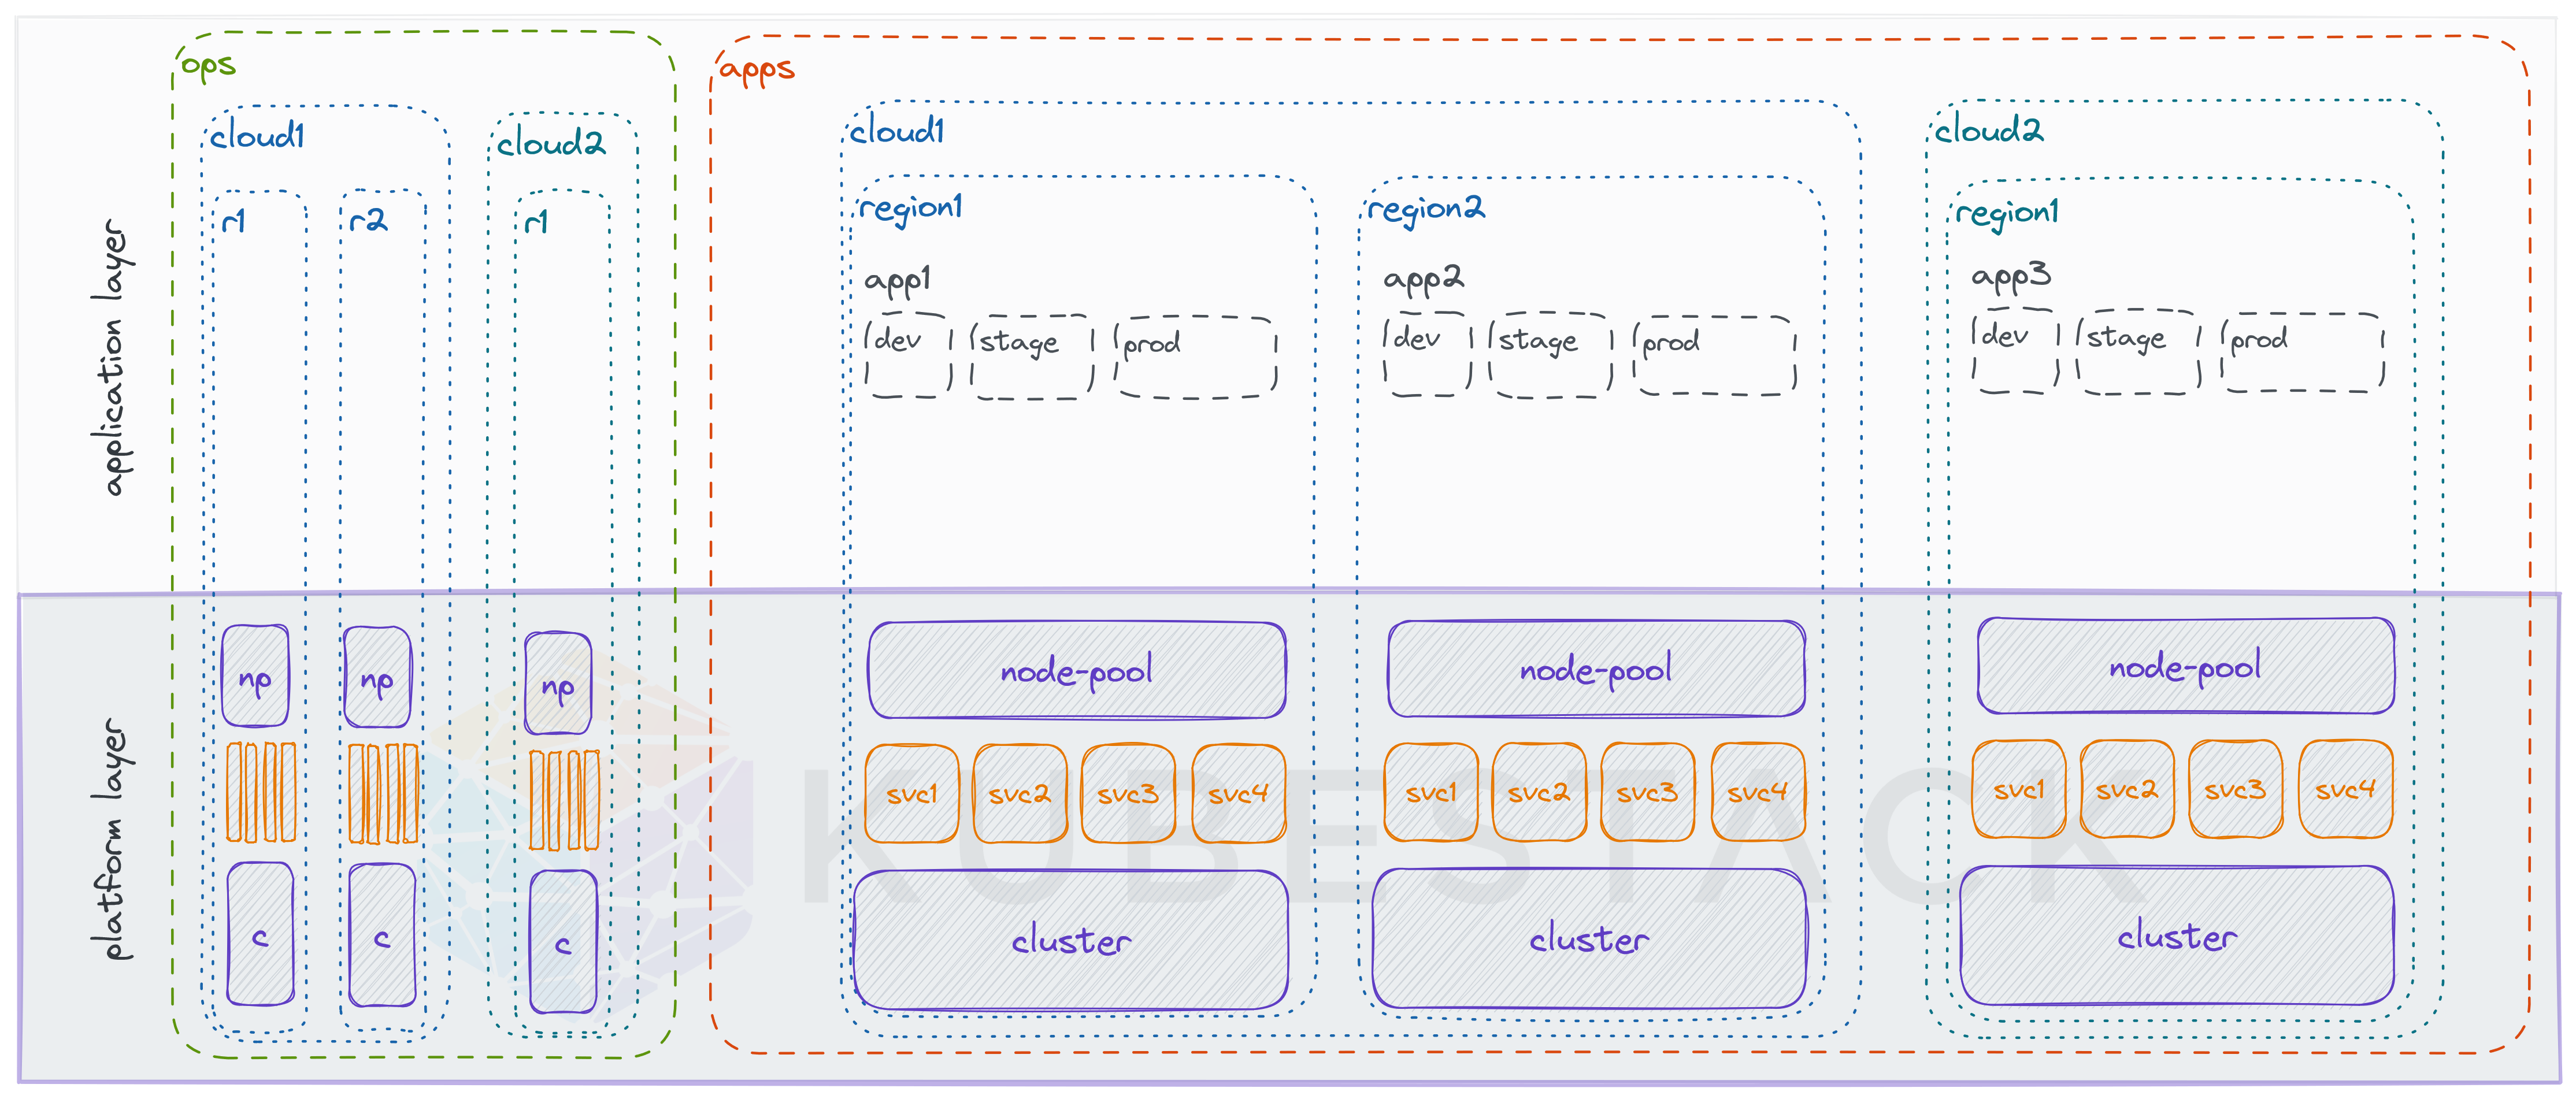 Platform Architecture Example (multi-cloud and multi-region)